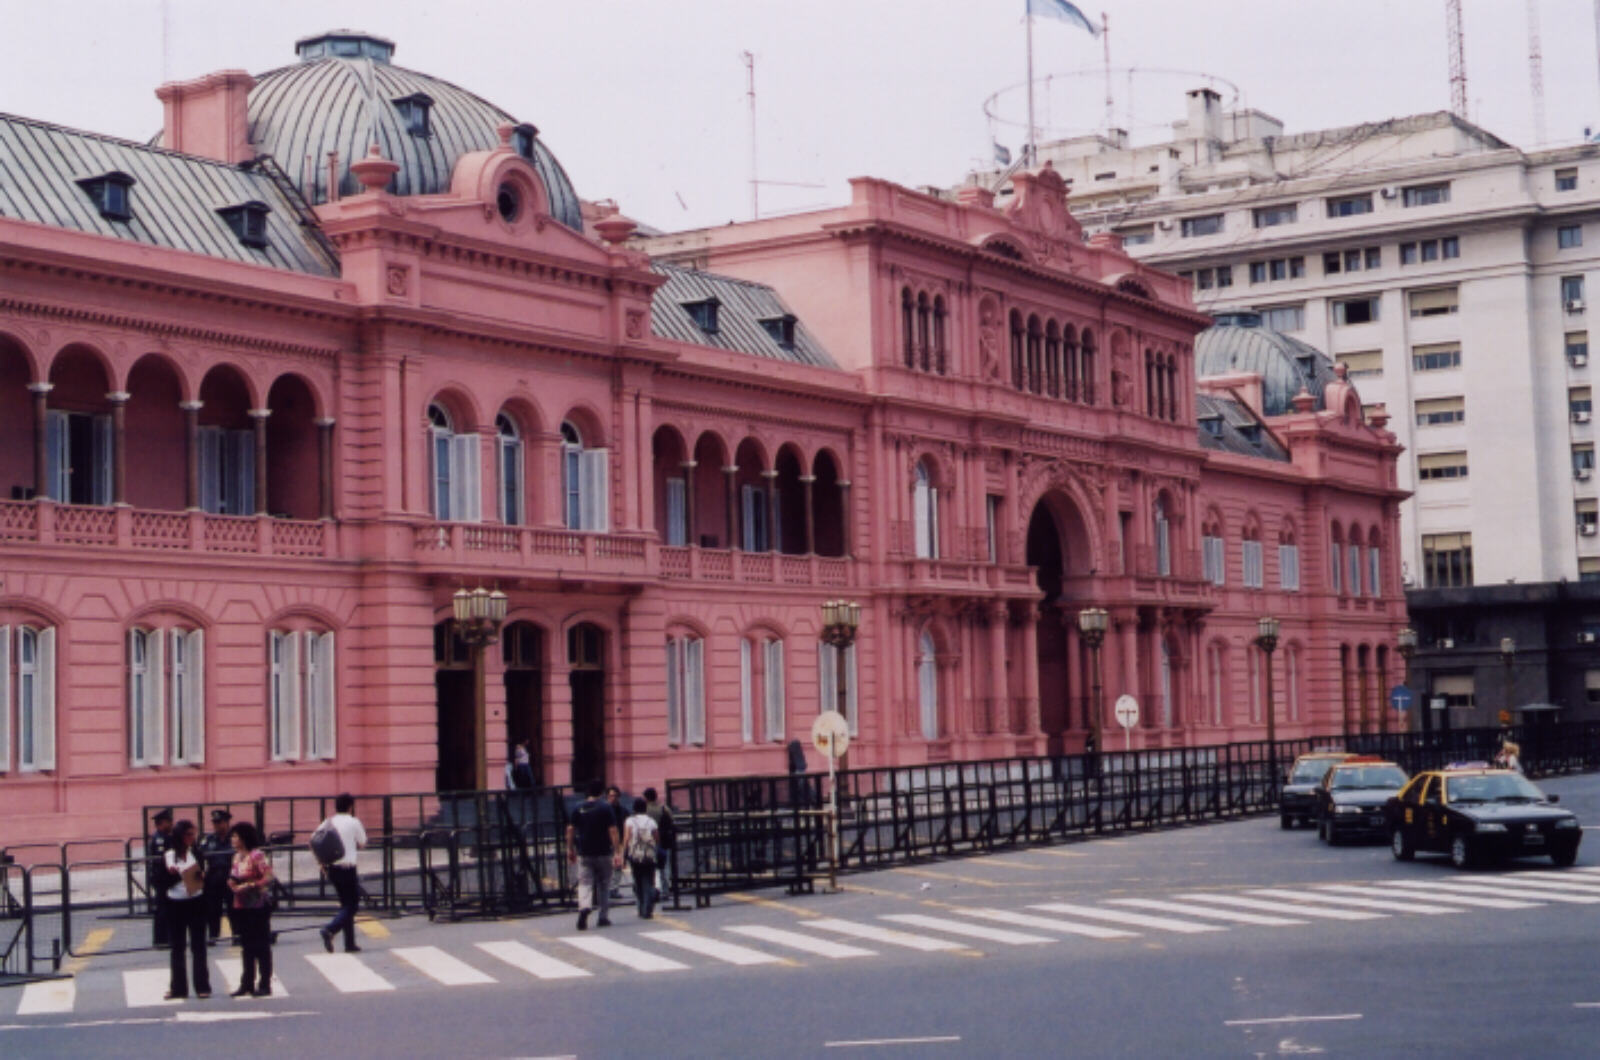 Casa Rosada, the Presidential palace with Evita's balcony, in Plaza de Mayo, Buenos Aires